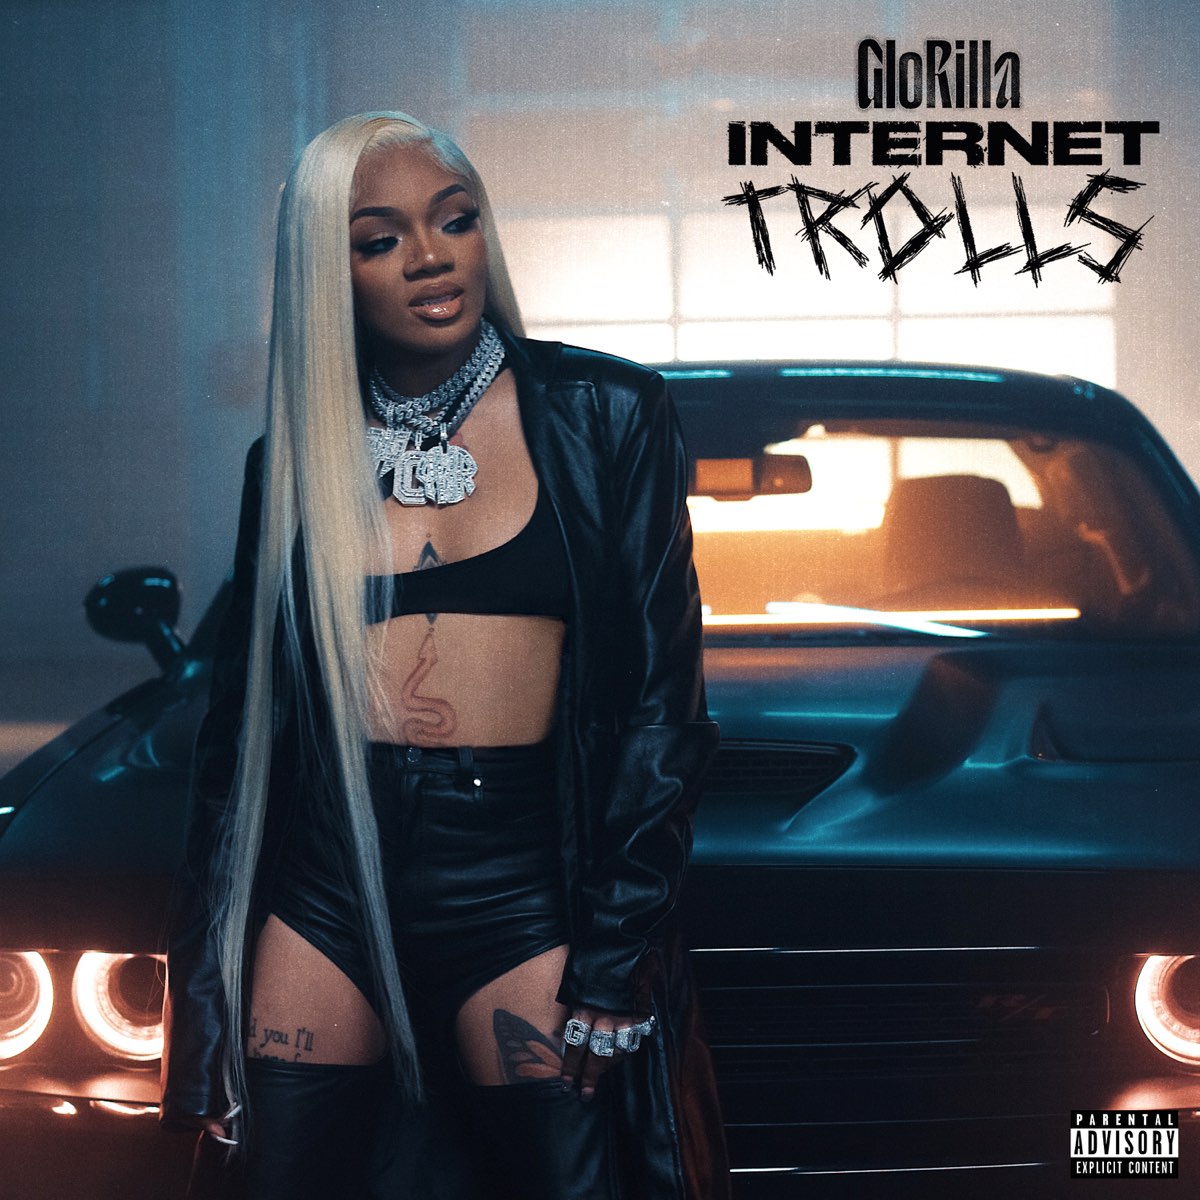 GloRilla Drops “Internet Trolls” Single